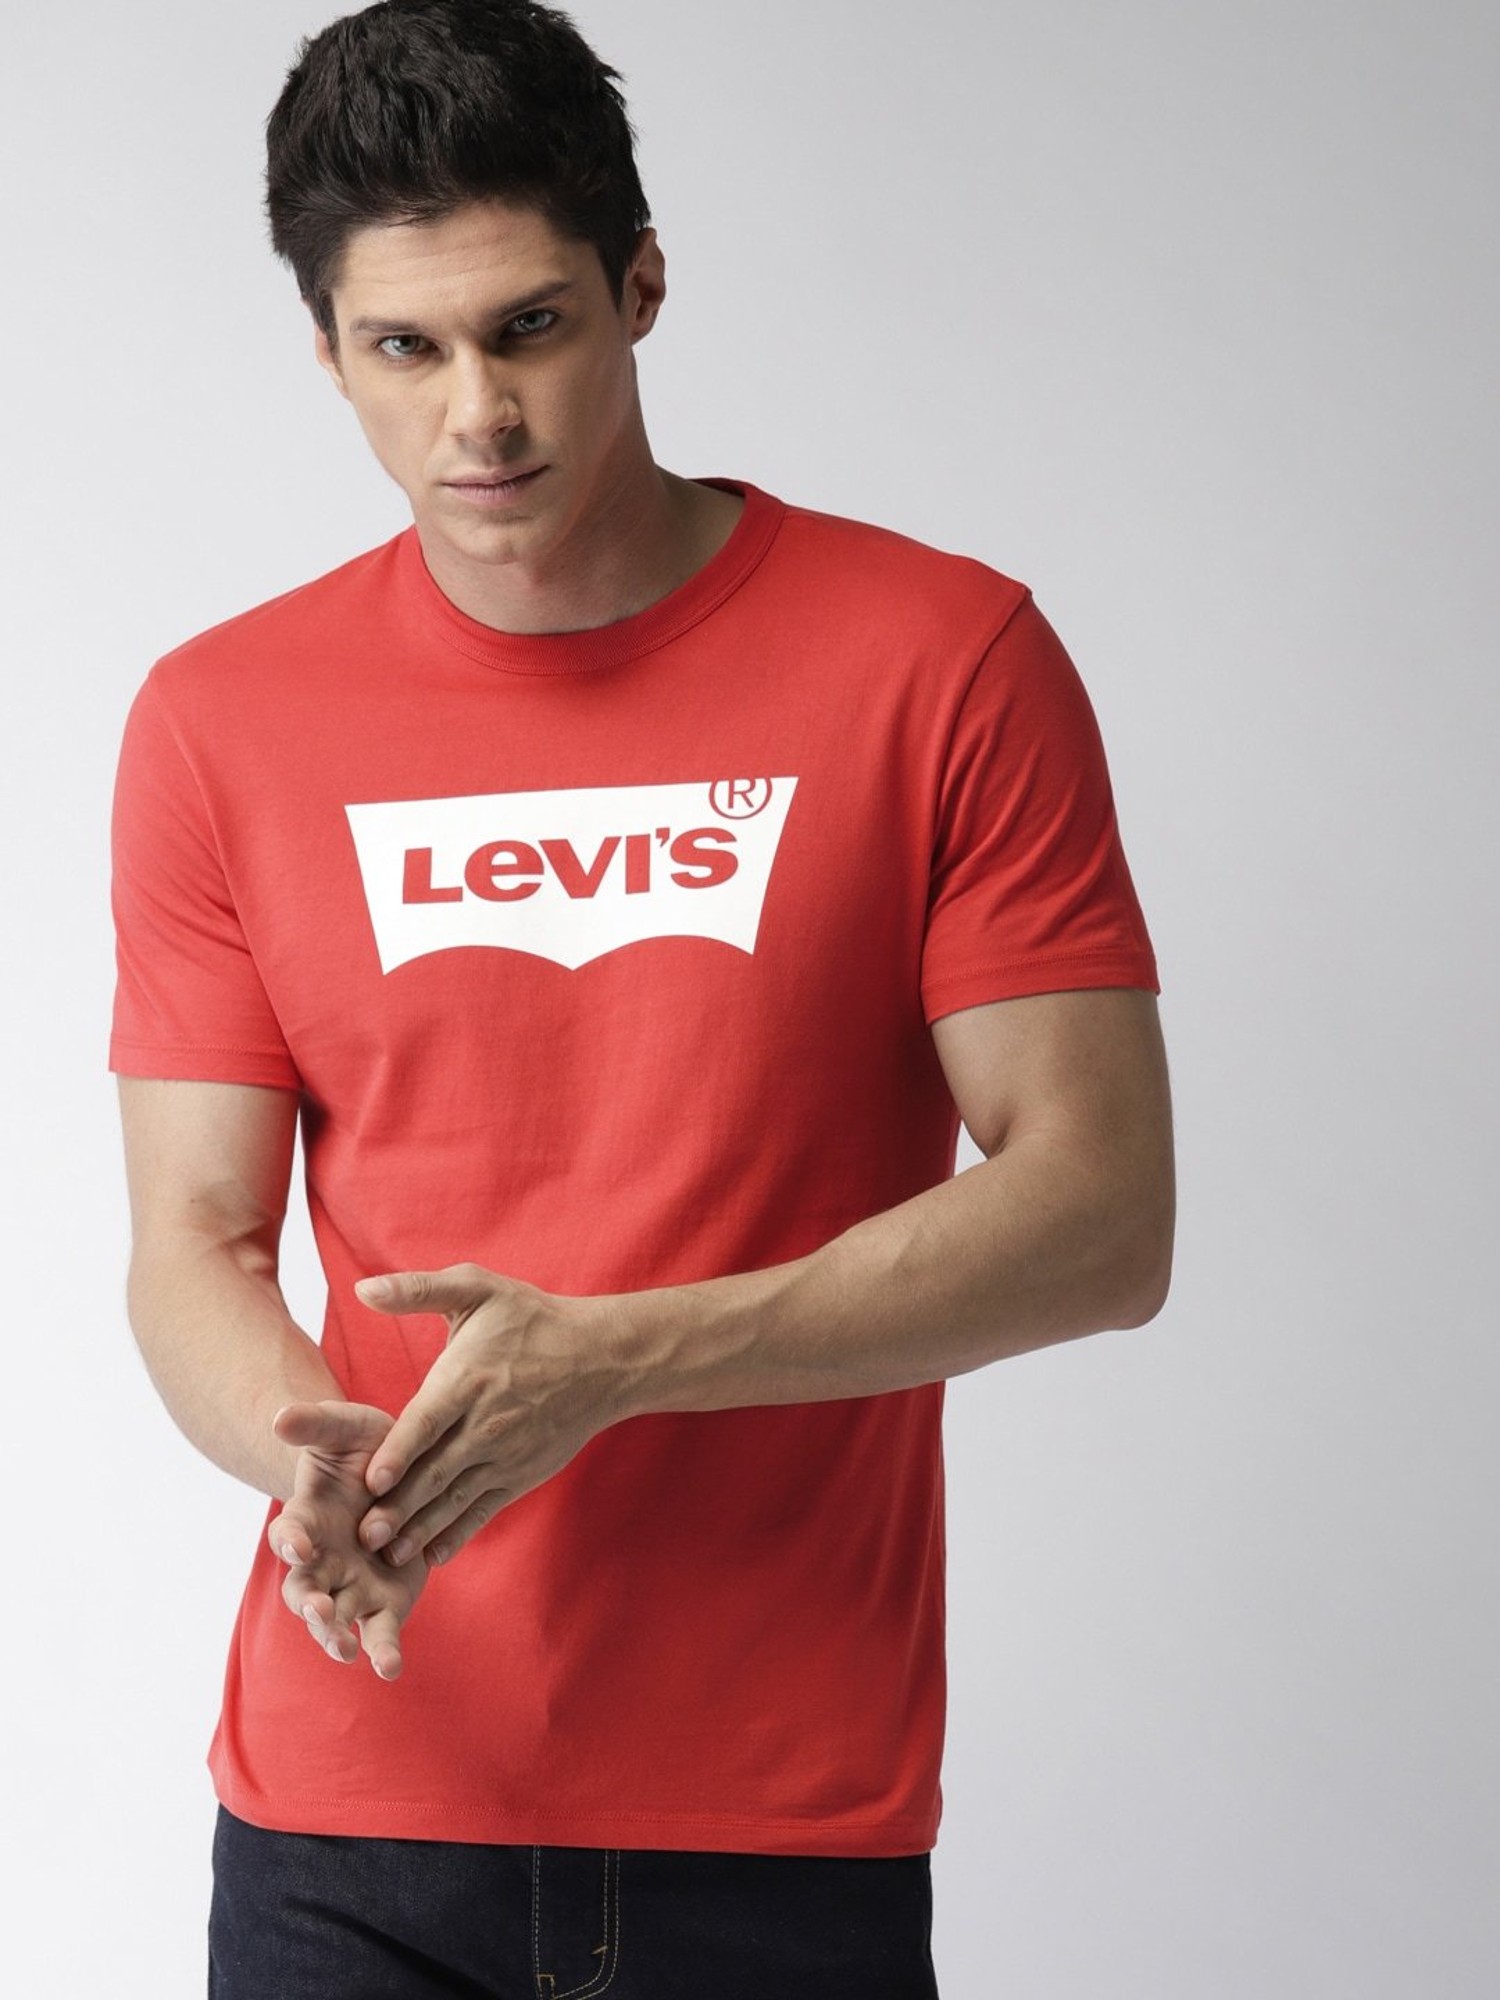 Buy Levi'S Red Cotton T-Shirt for Mens Online @ Tata CLiQ